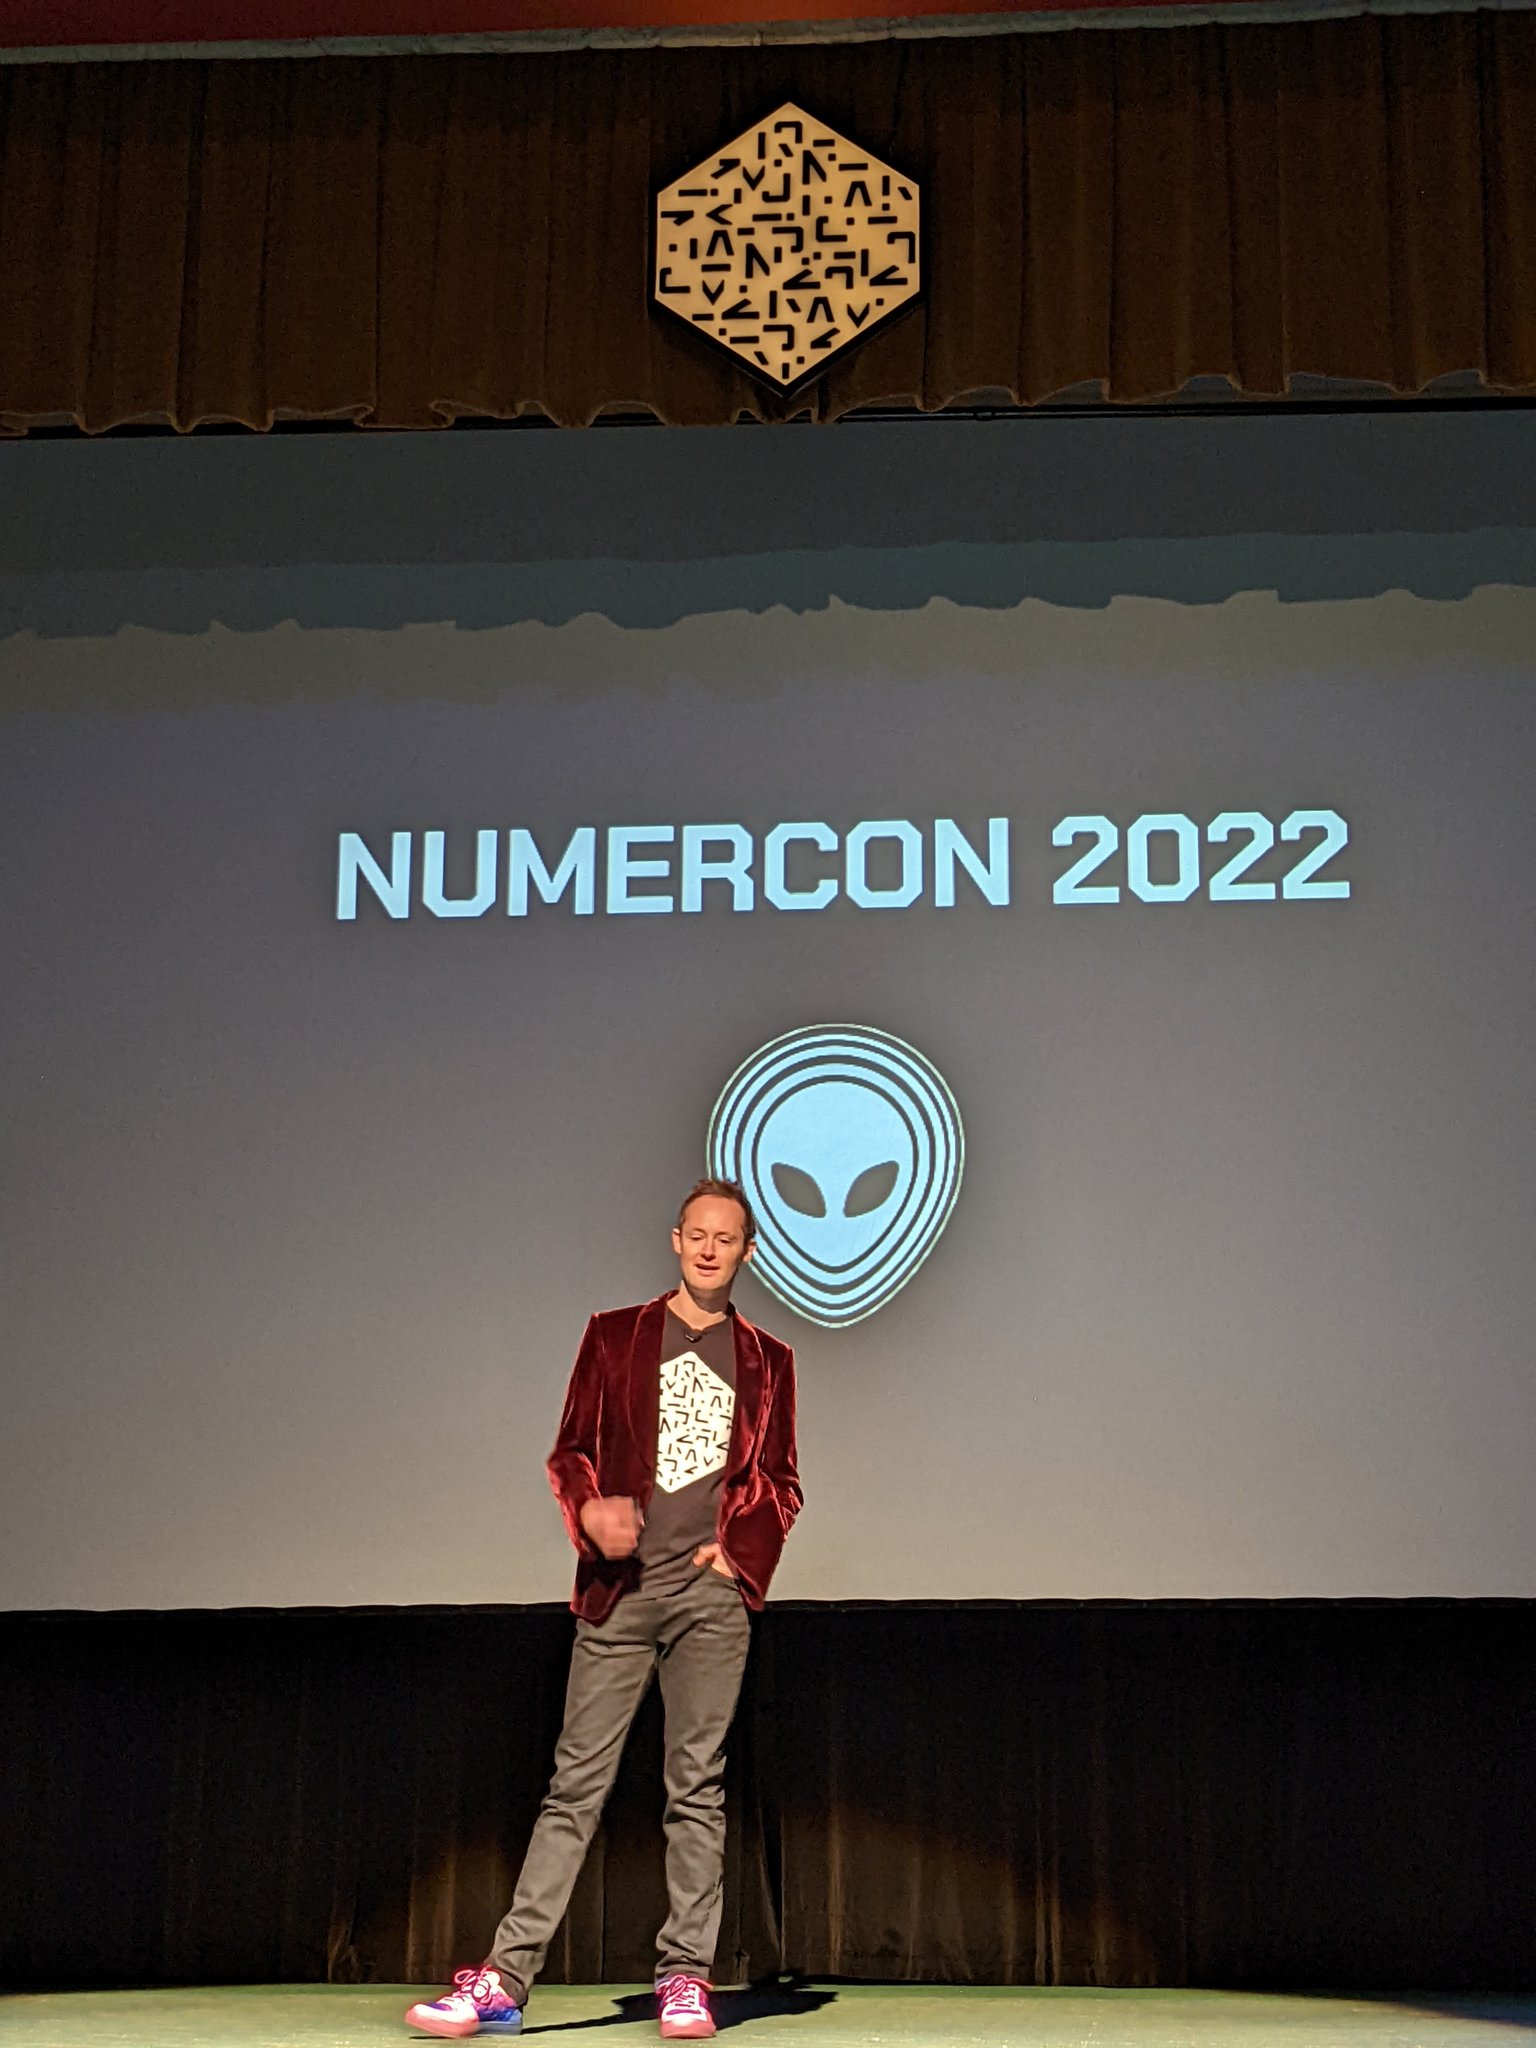 Numerai on Twitter: "RT @schwentker: .@numerai Numercon 2022 launch